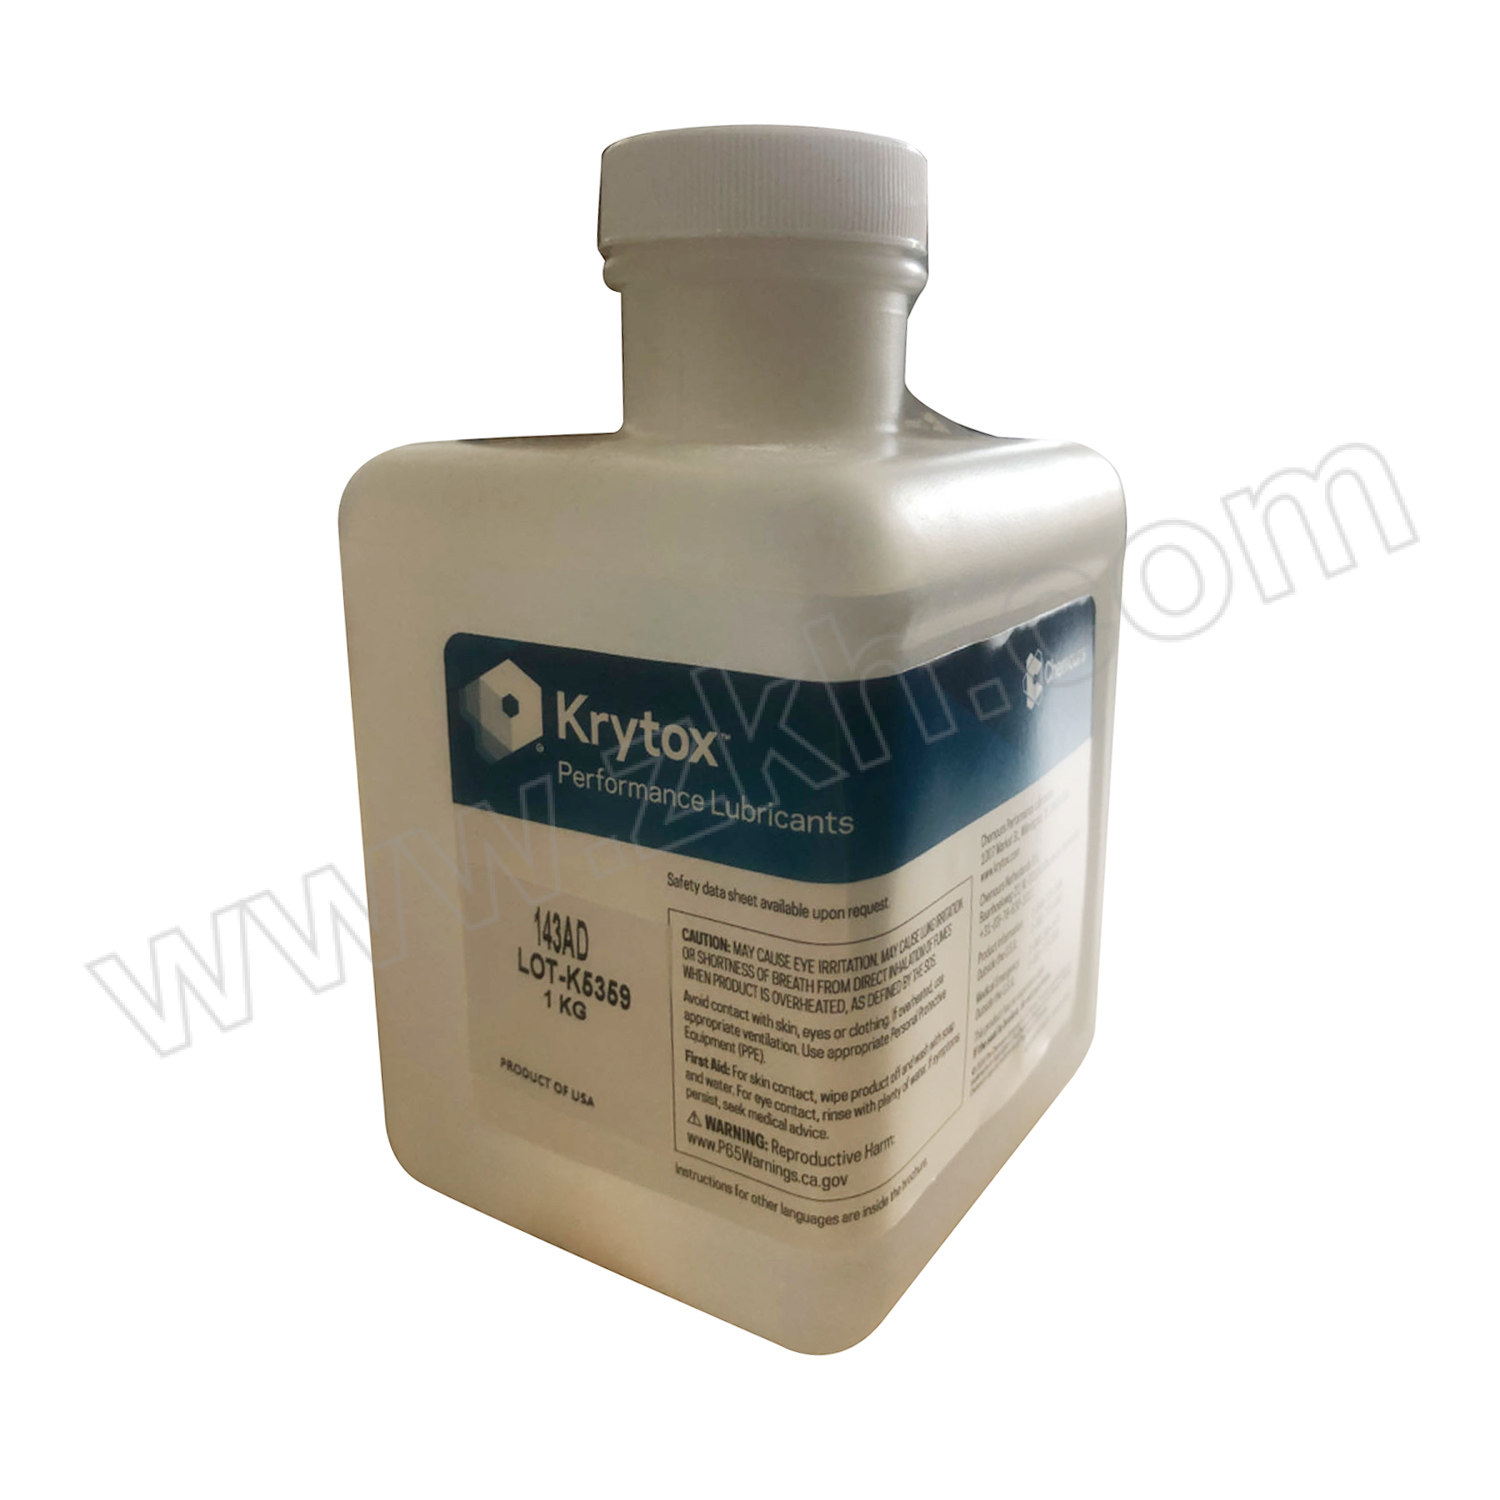 CHEMOURS/科慕 杜邦航空用油 Krytox lubricant, PFPE, 143AD   1kg 1桶